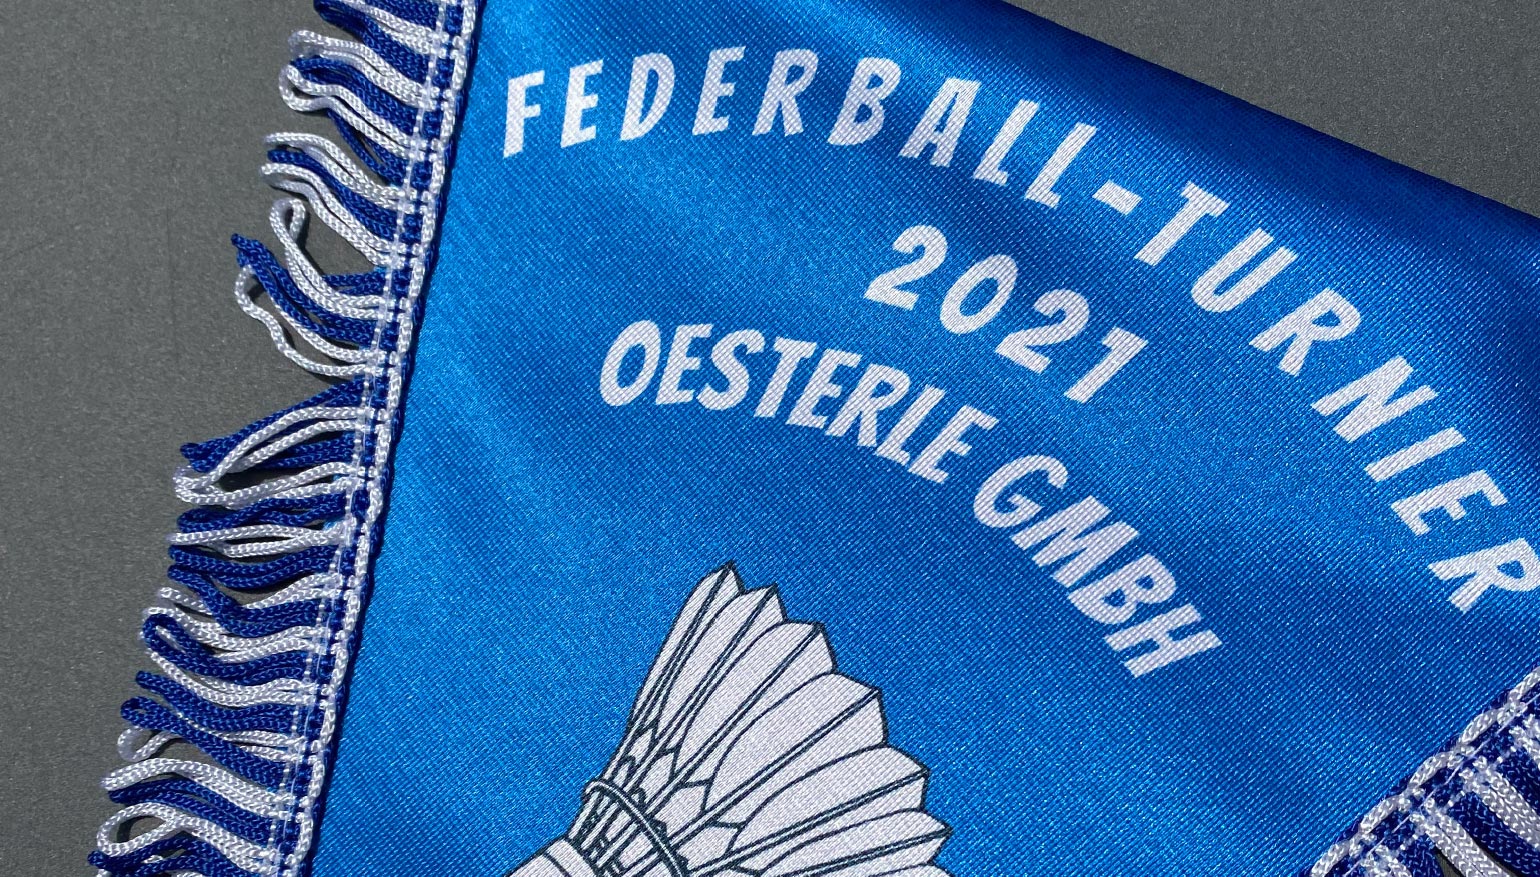 Federball Turnier Oesterle Gmbh